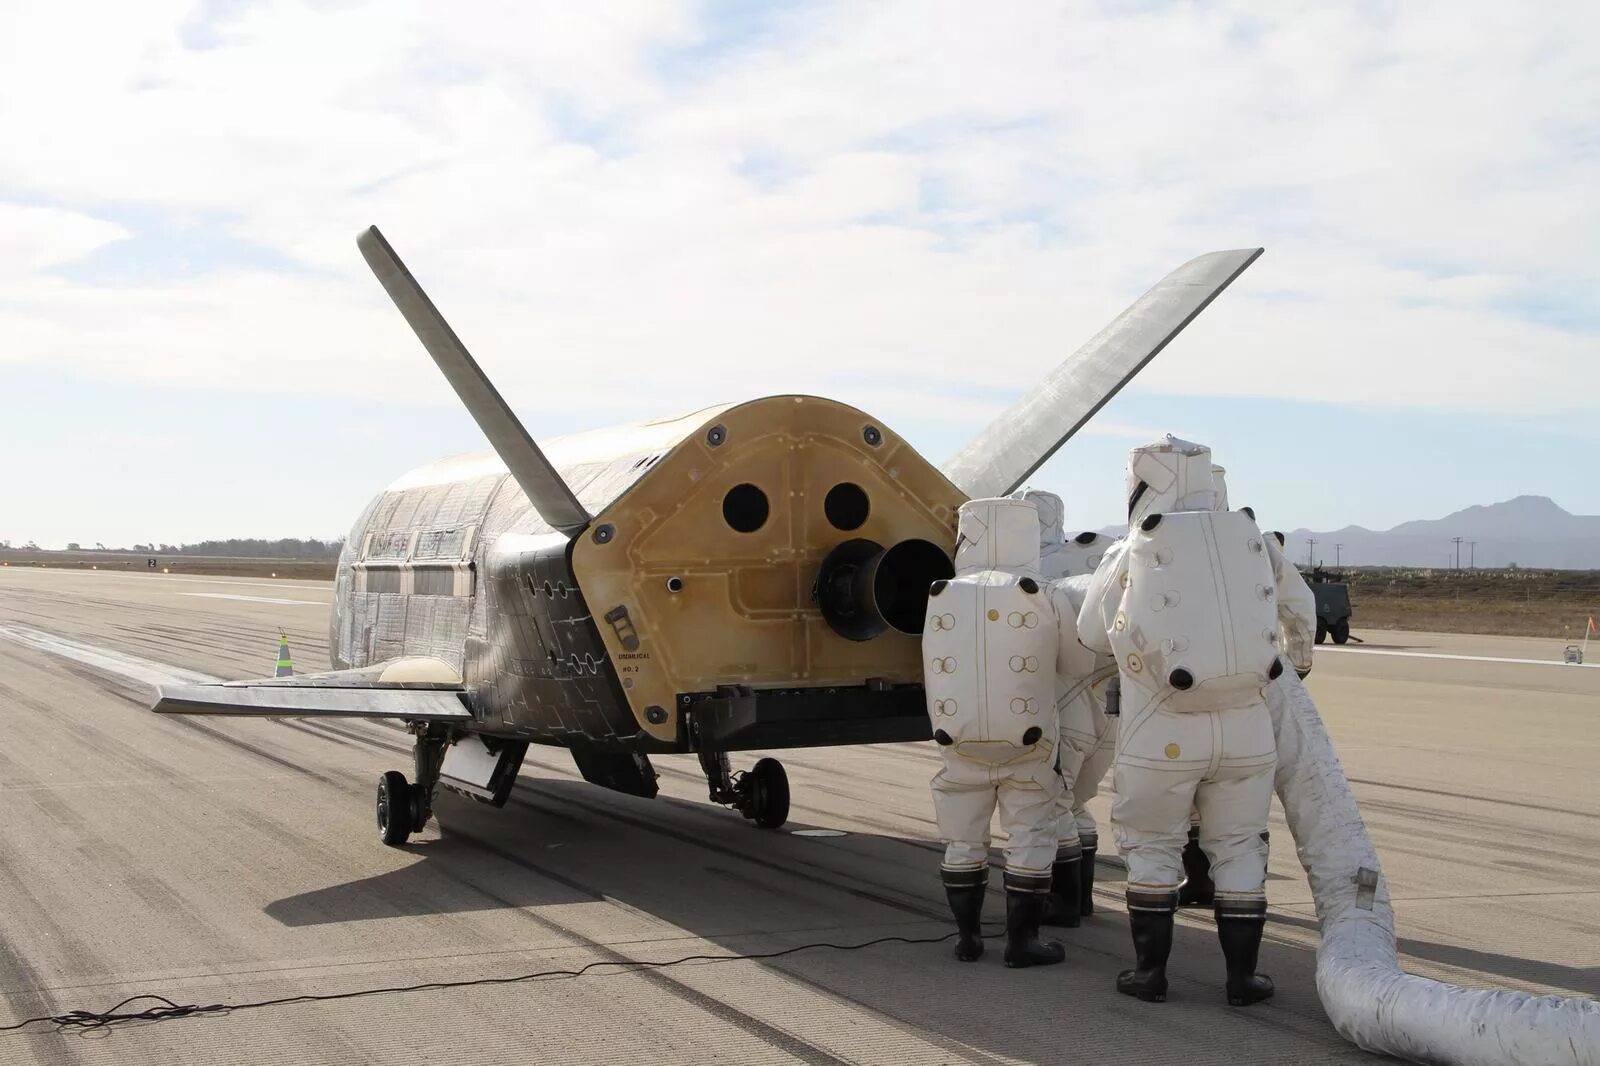 Х 37 б. Орбитальный самолёт x-37b. Космоплан x-37b. Космический беспилотник x-37b. Boeing x-37 - космический беспилотник.